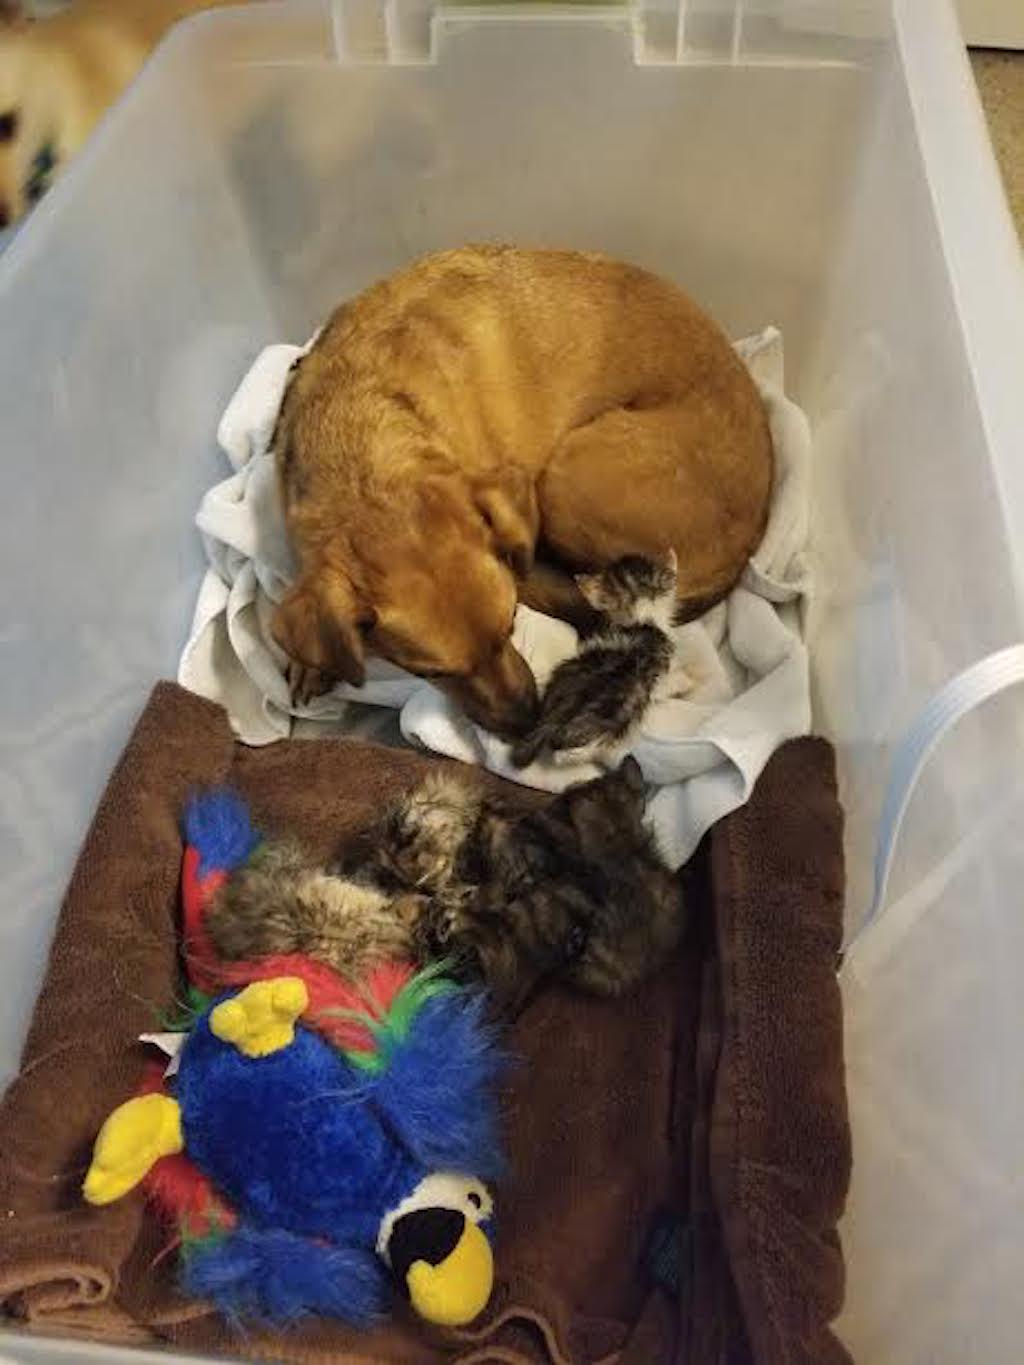 roger dog rescue kittens viral photo